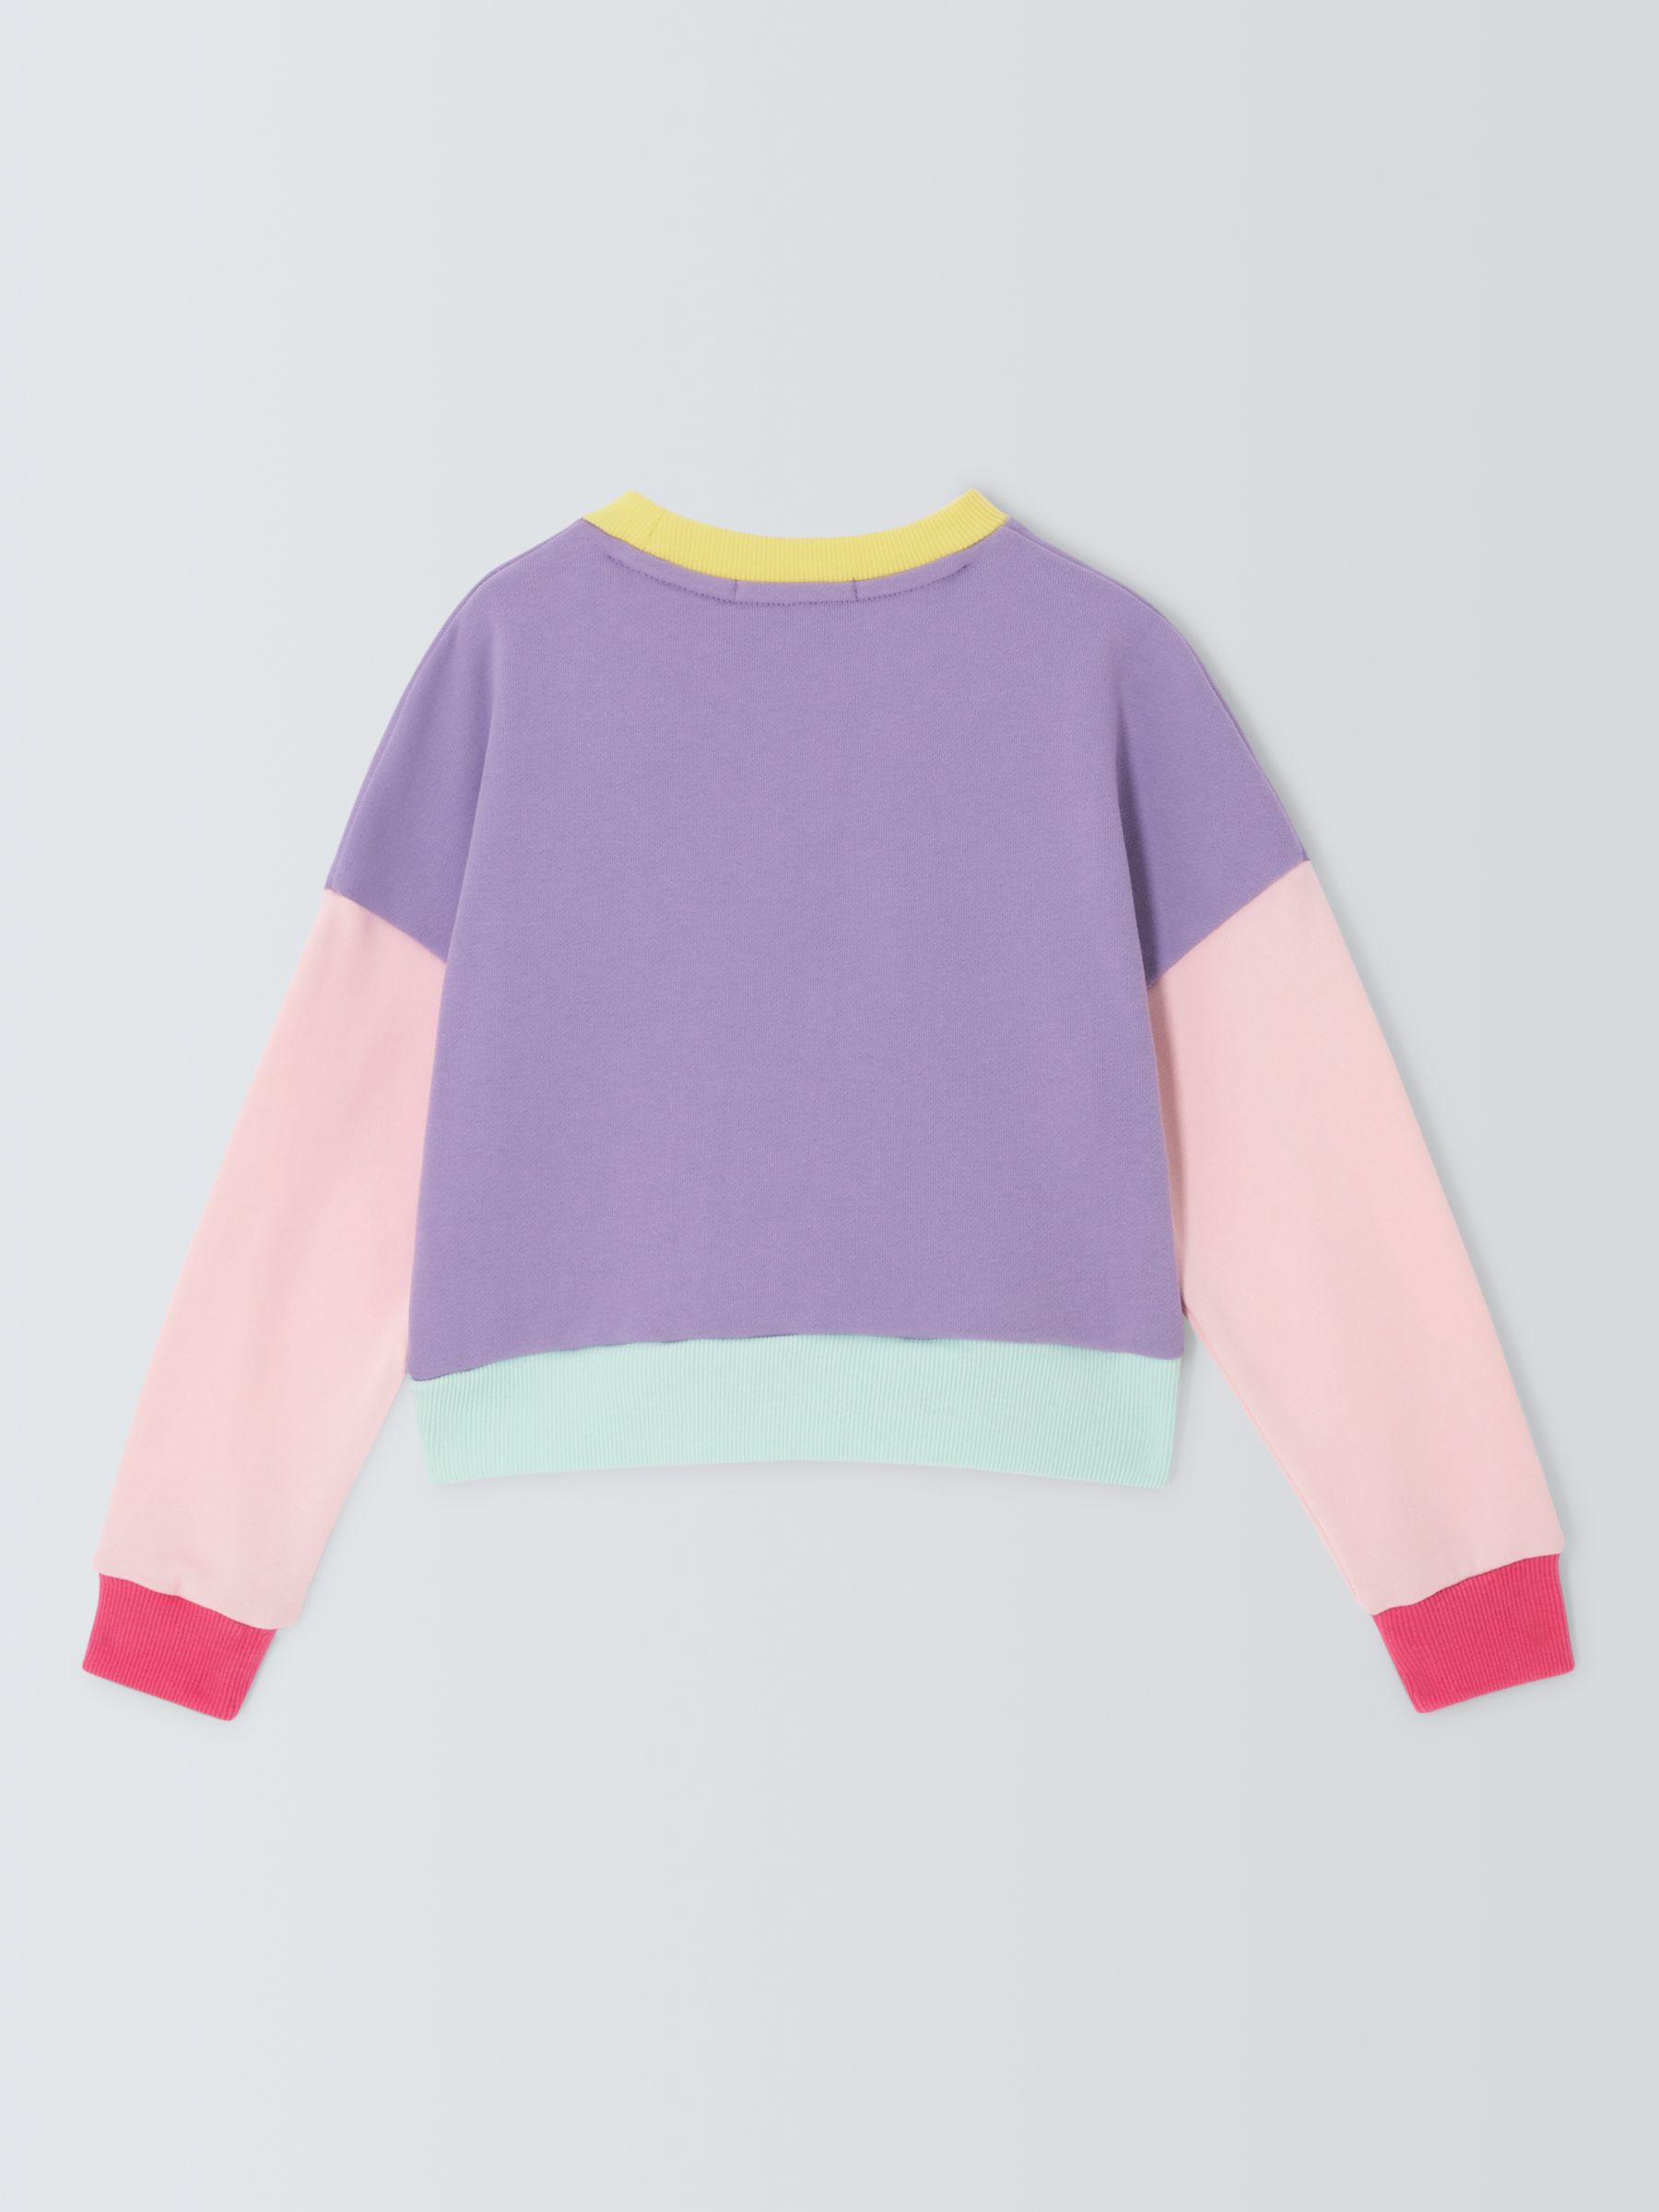 Buy Olivia Rubin Colour Block Script Logo Sweatshirt, Purple/Multi Online at johnlewis.com